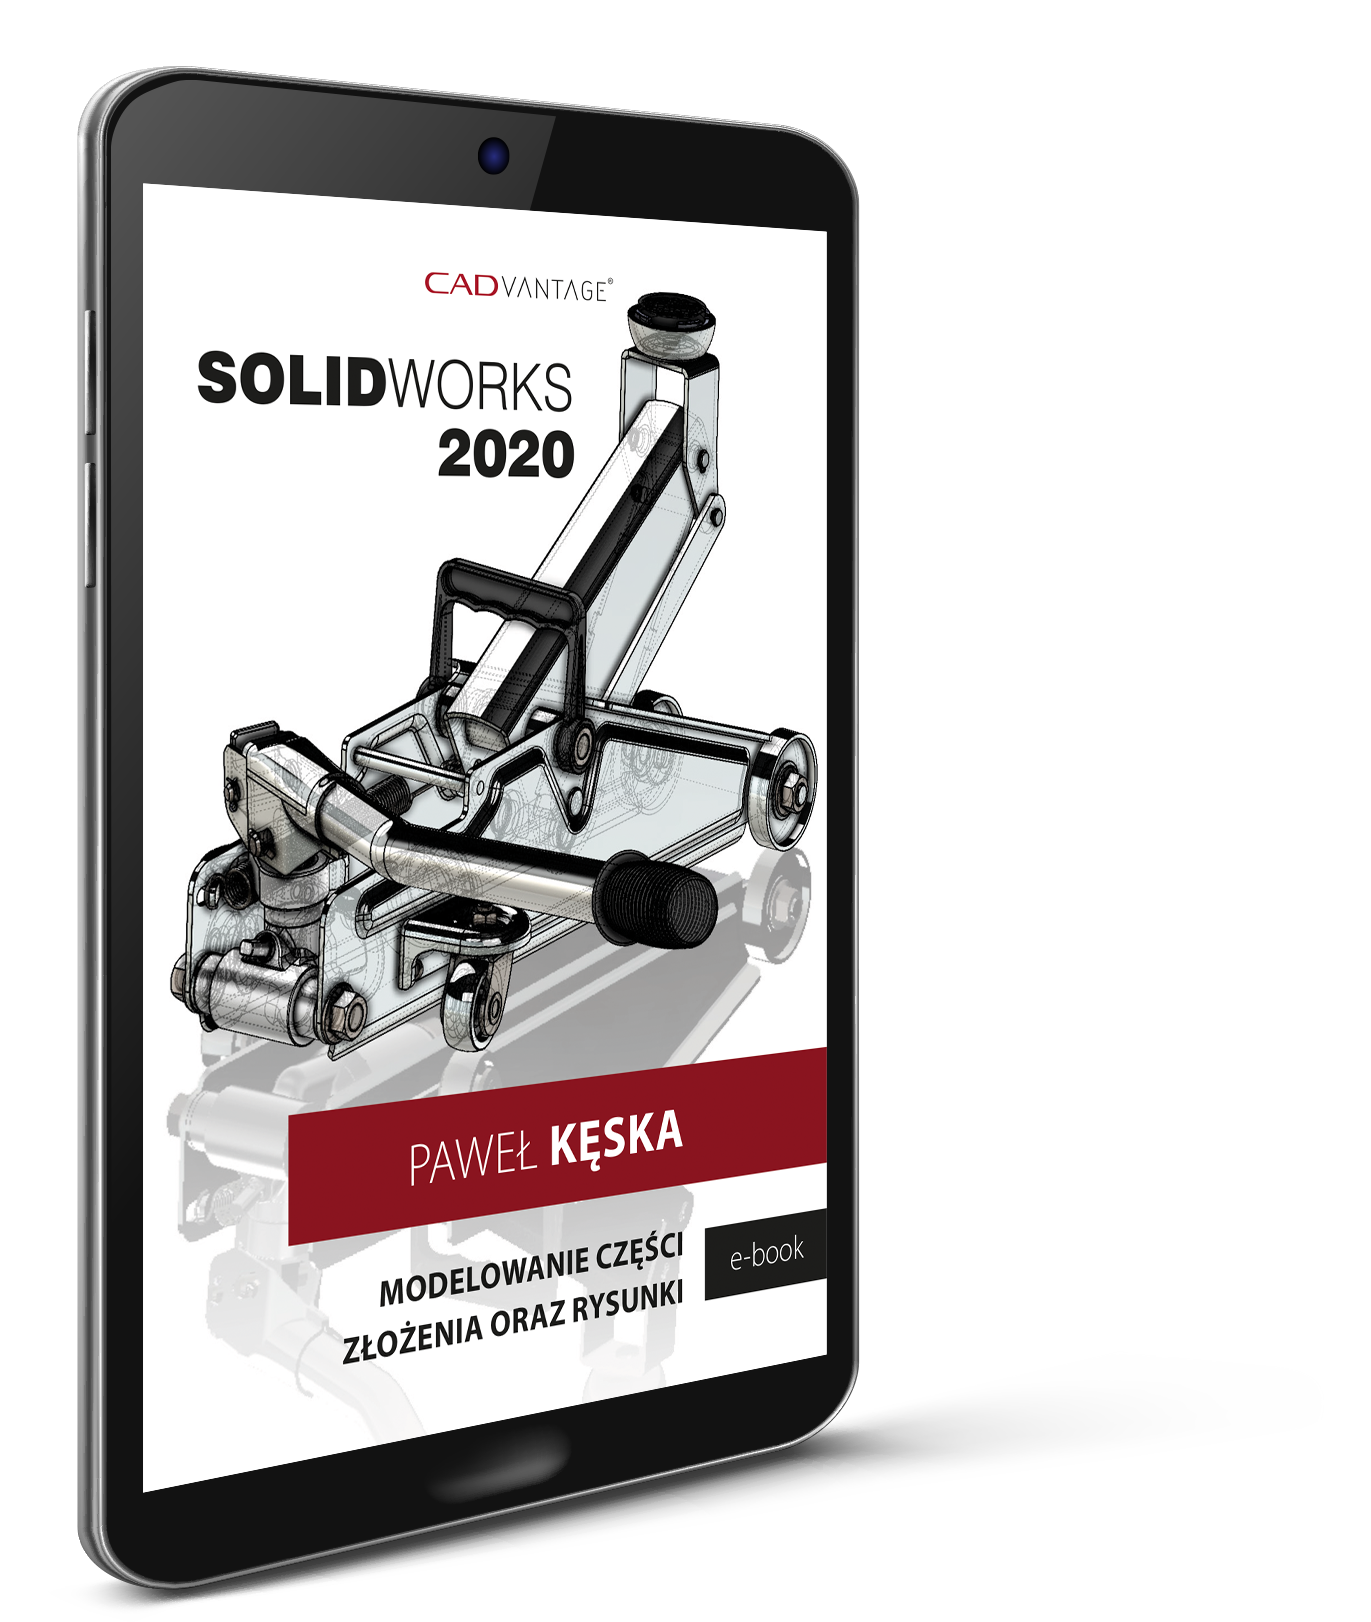 The Latest Solidworks Handbook 2020 Finished Solidworks Blog